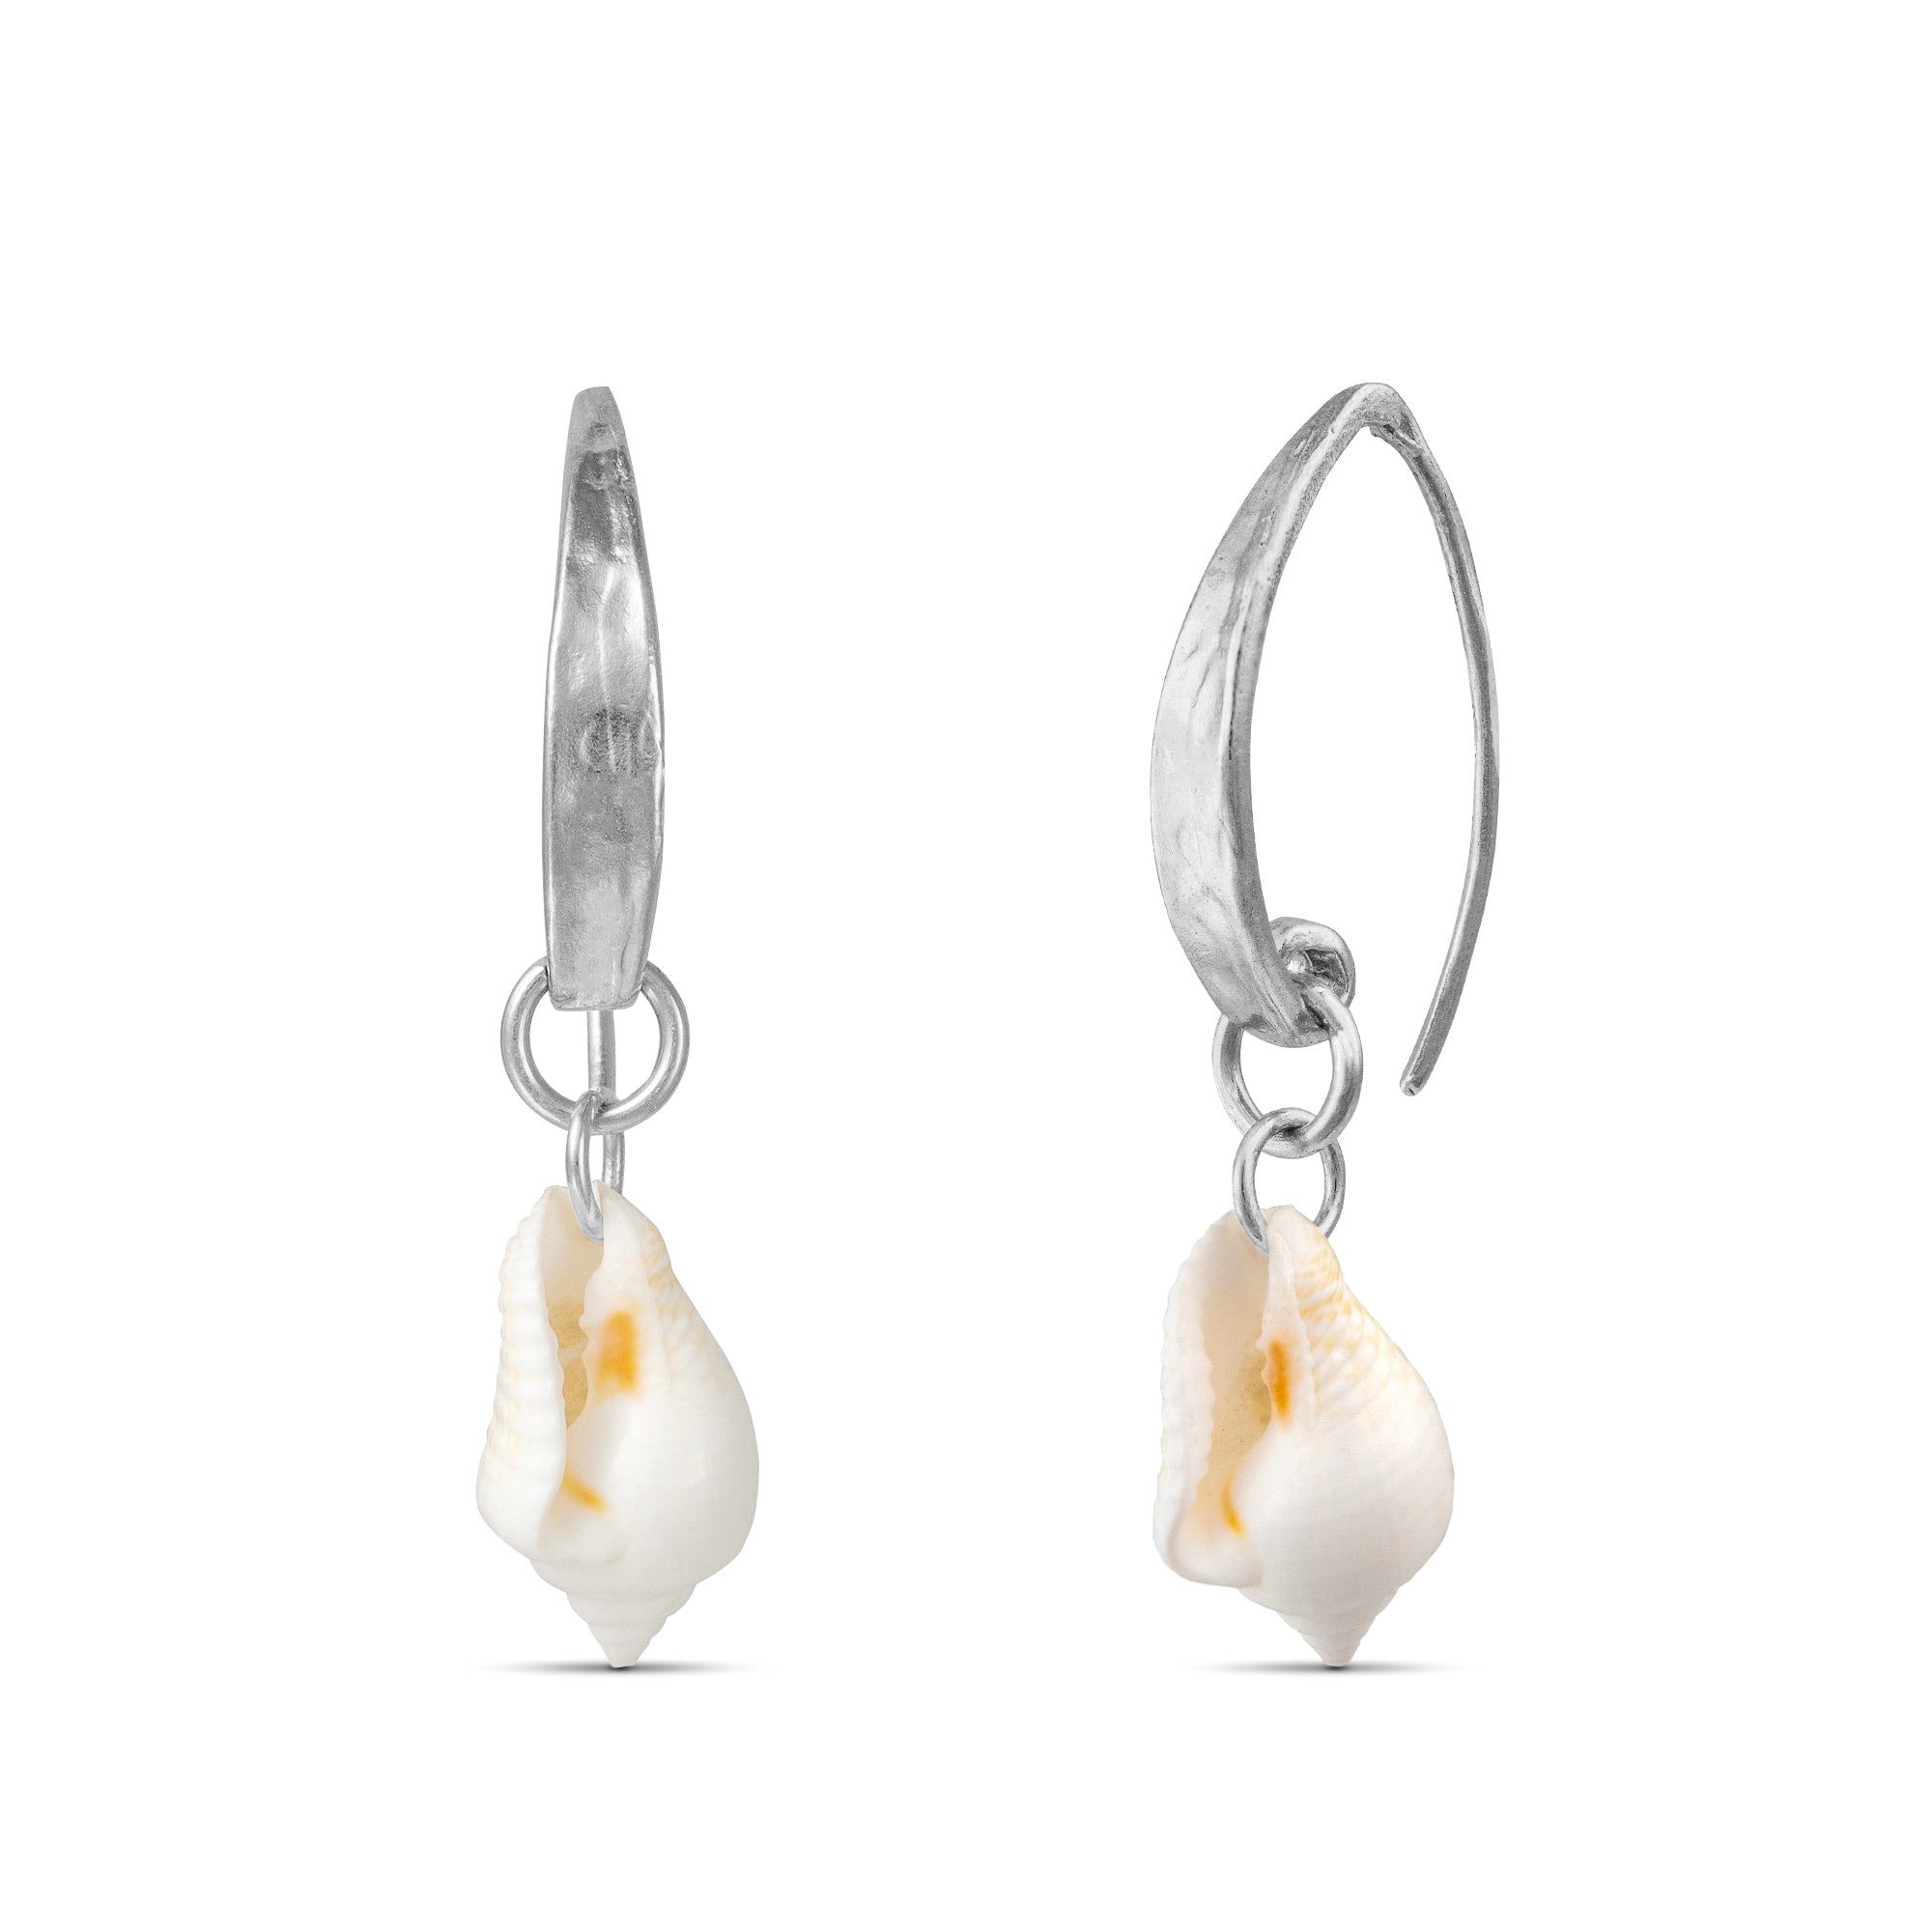 Concha - White Shell Earrings Gold, Silver